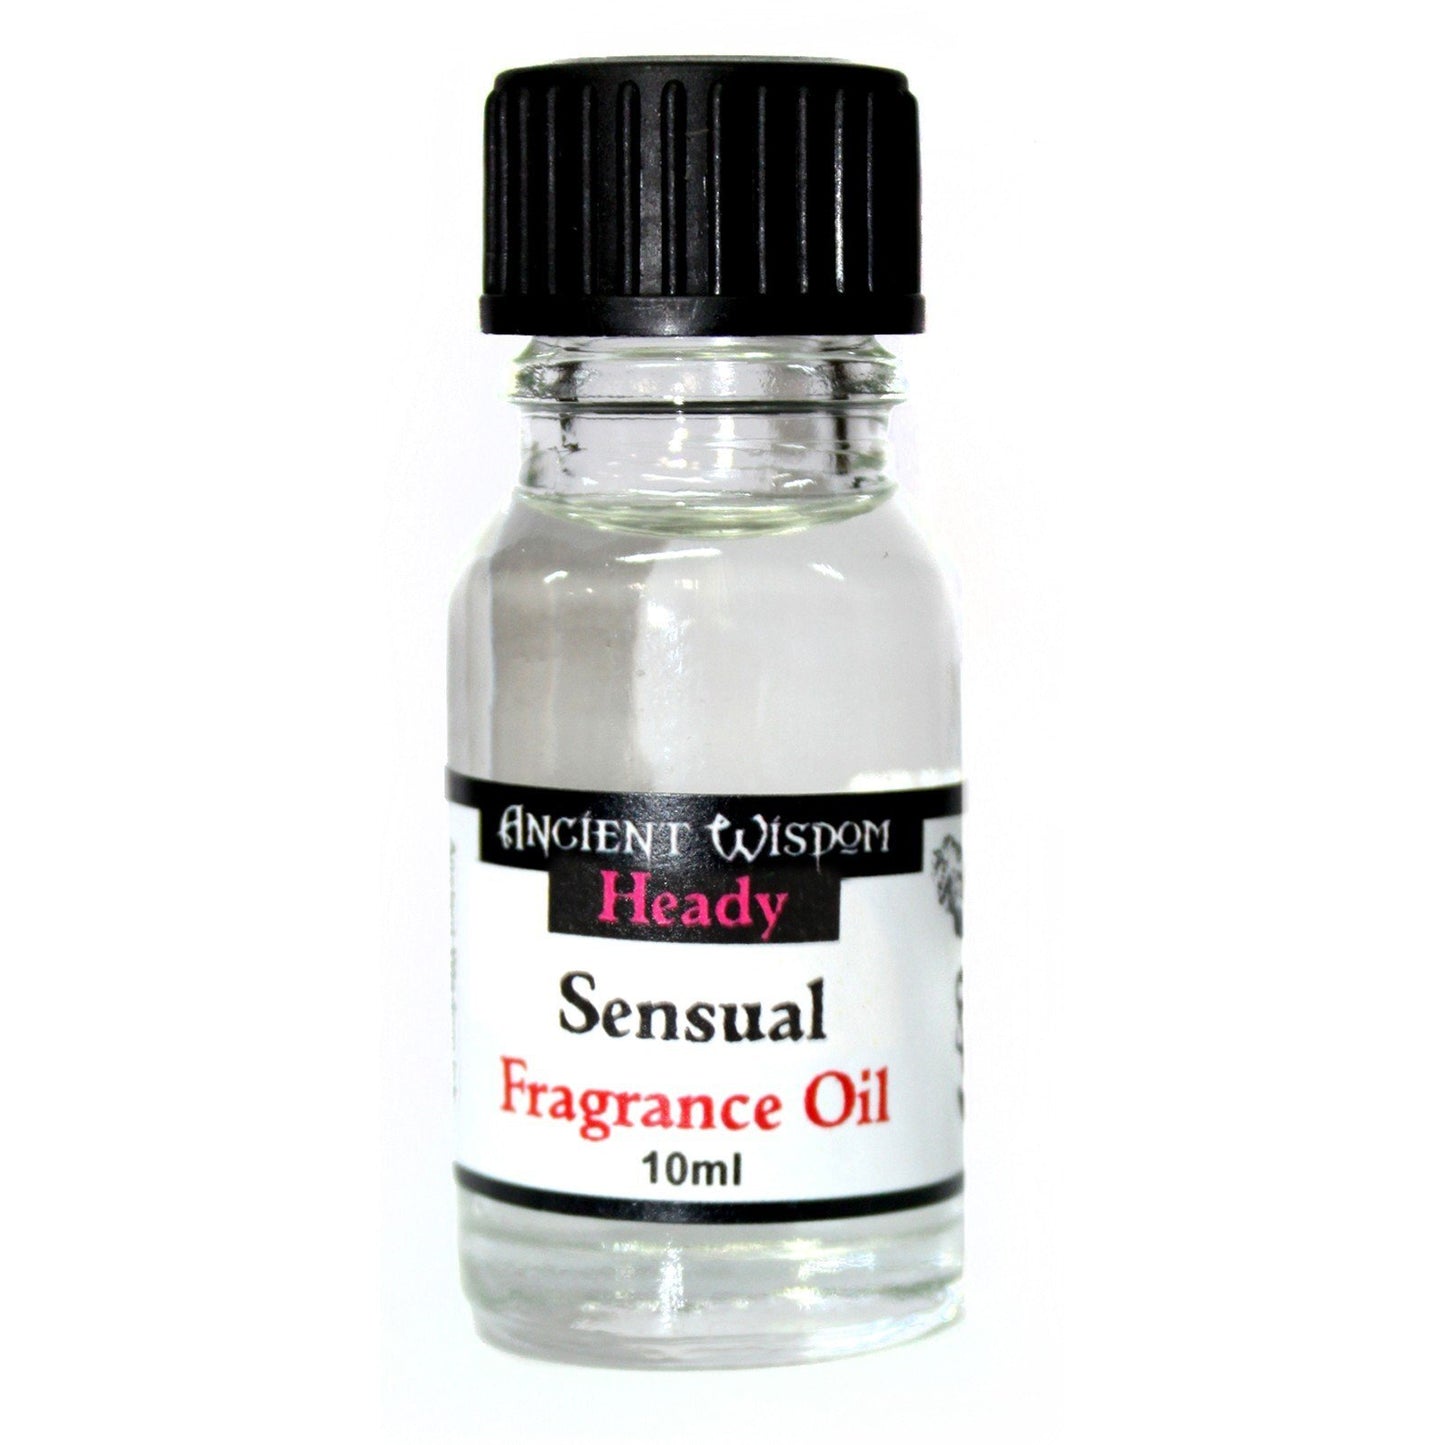 Sensual Fragrance Oil